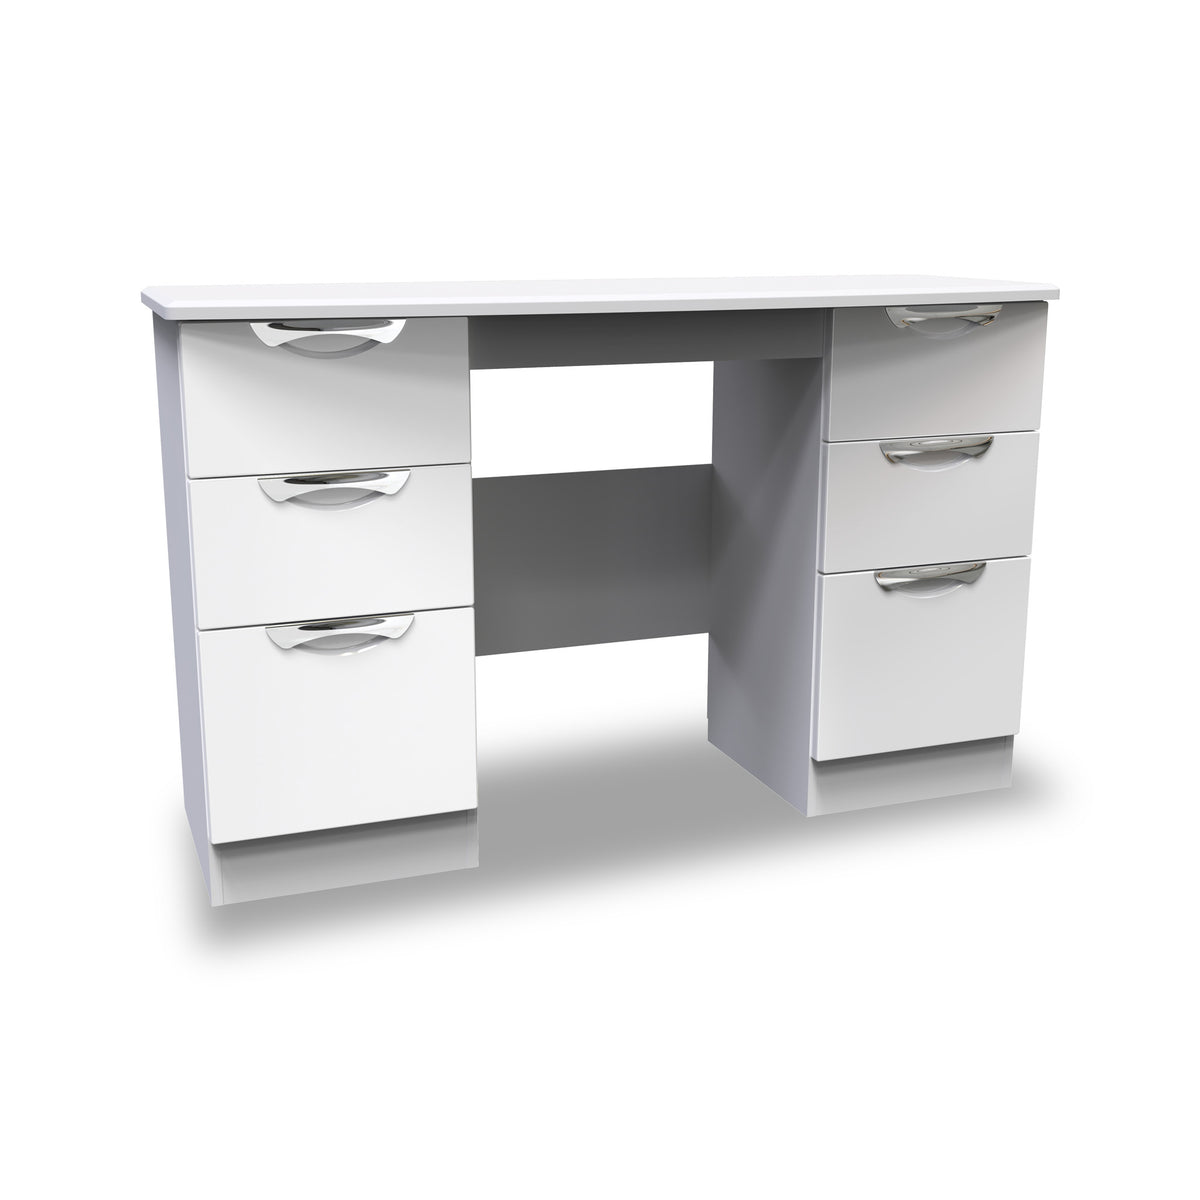 Beckett White Gloss 6 Drawer Storage Desk from Roseland Furniture